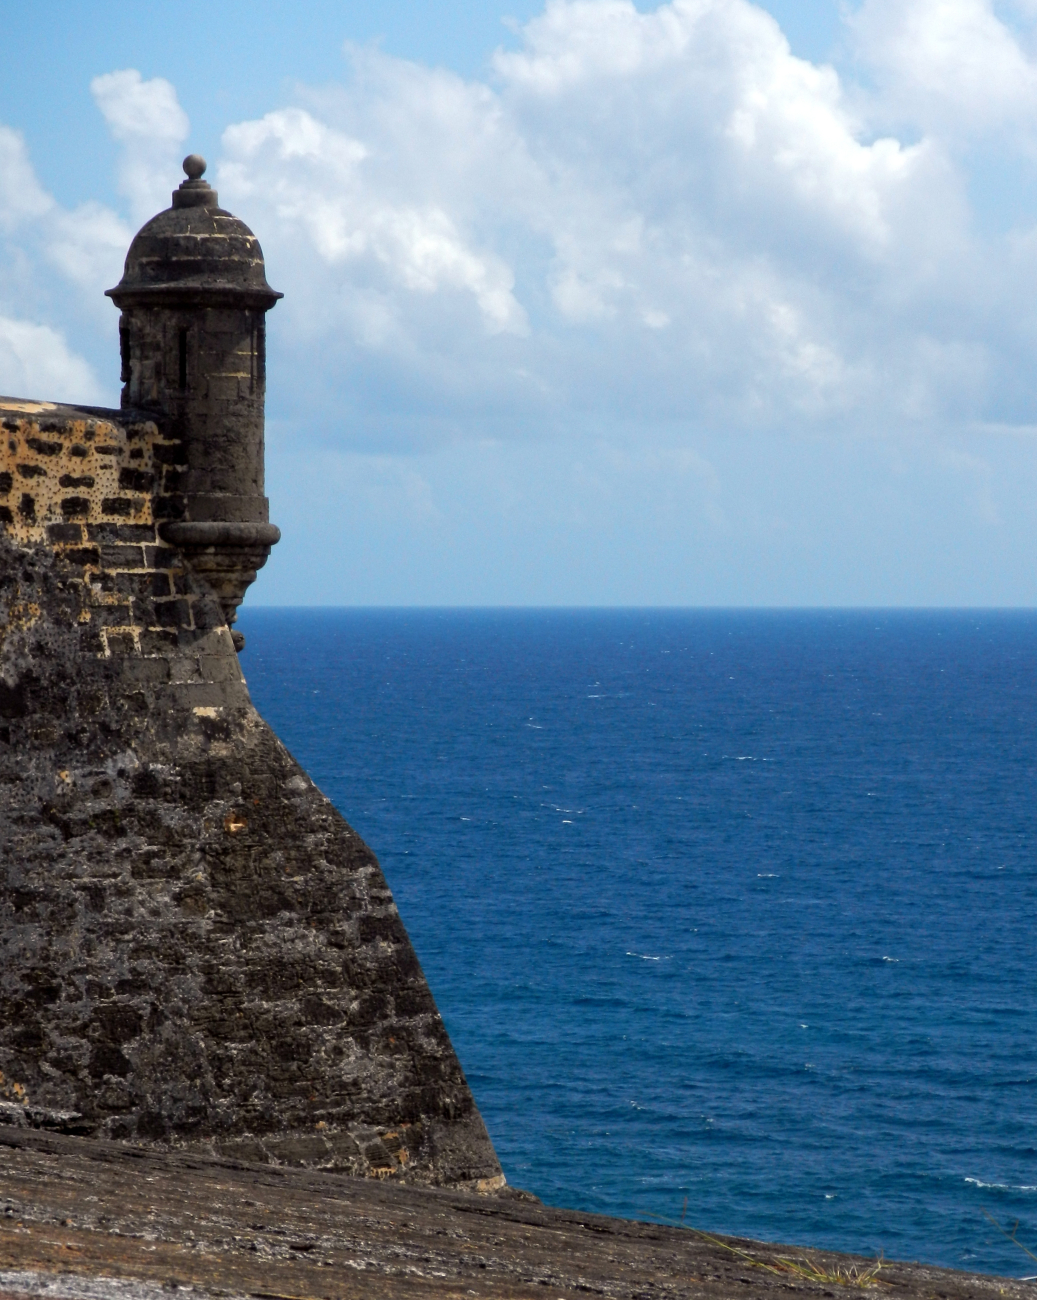 Guard tower on El Morro